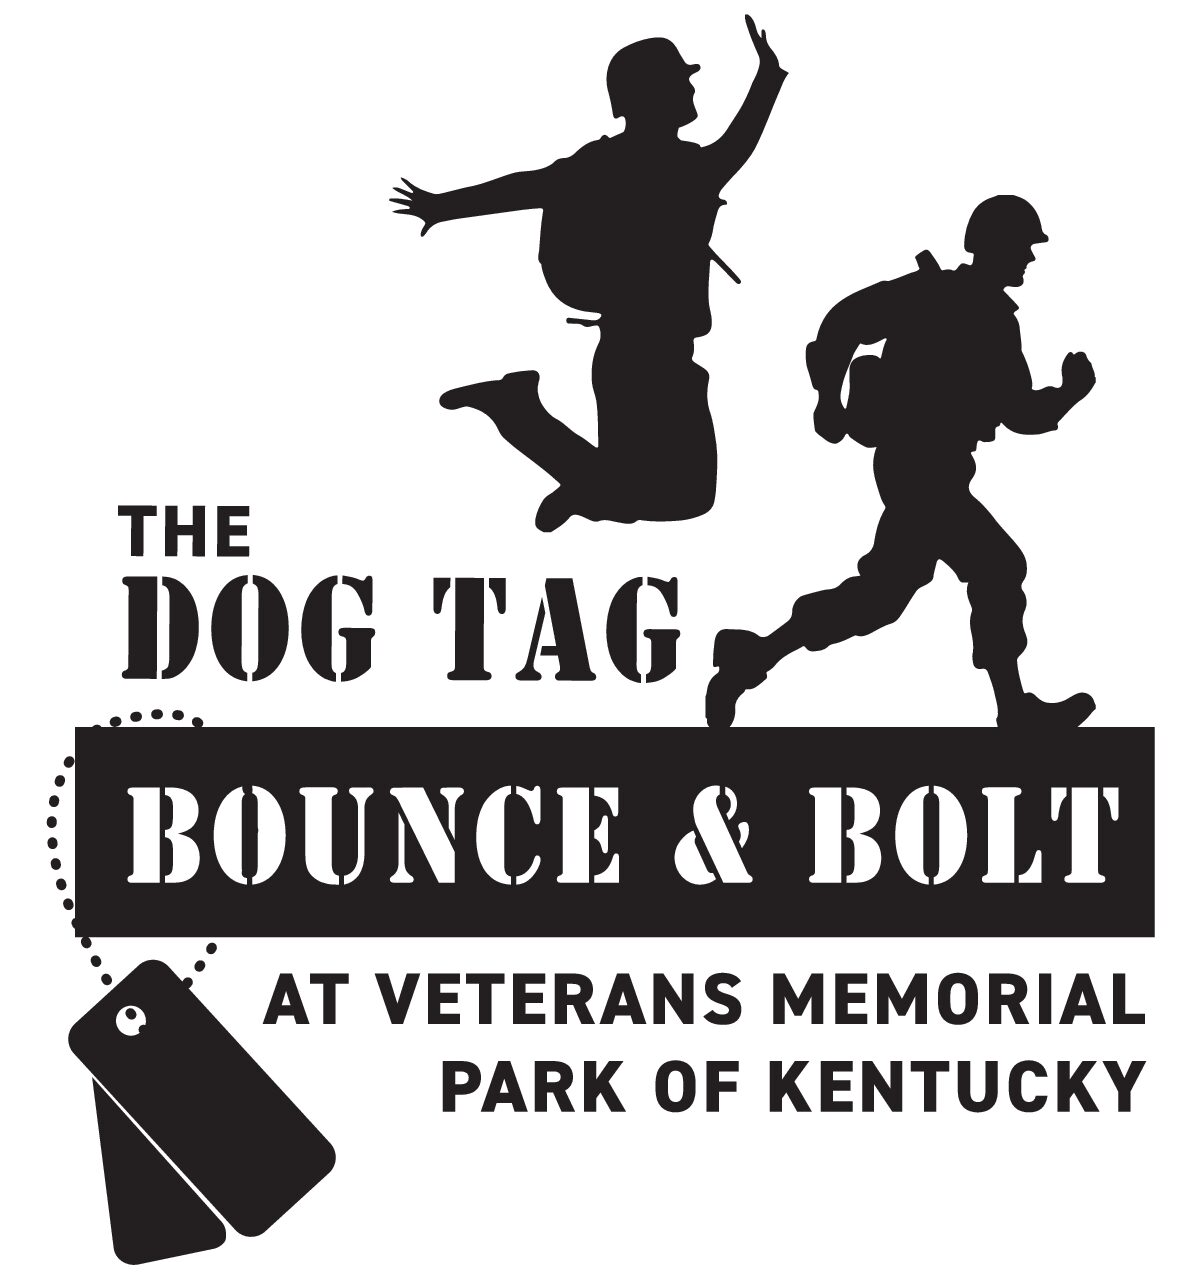 Dog Tag Bounce & Bolt logo on RaceRaves